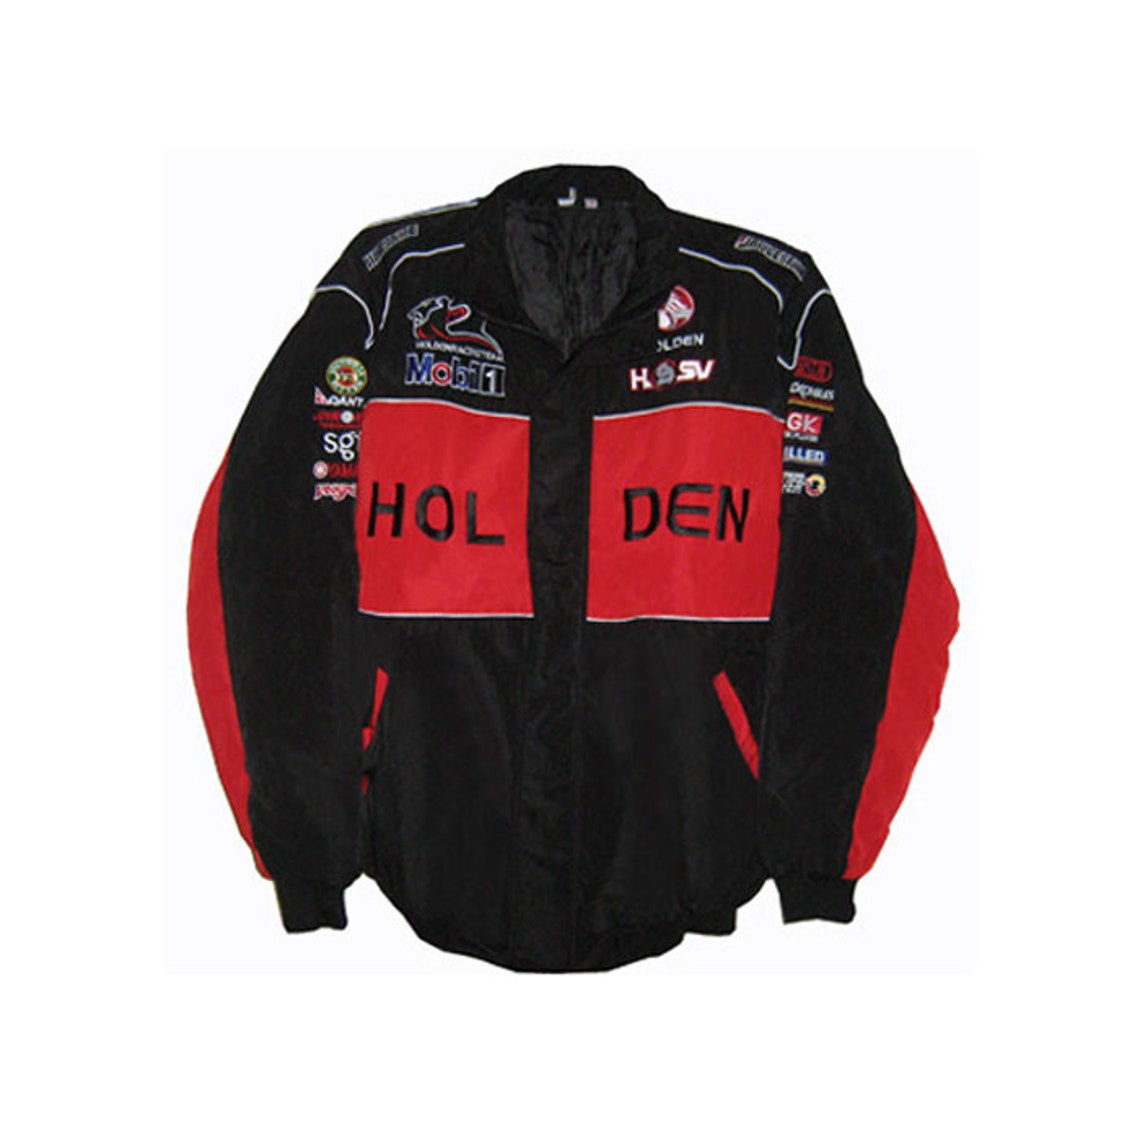 Holden WRC Jacket Black and Red Racing Jacket NASCAR Jacket - Etsy